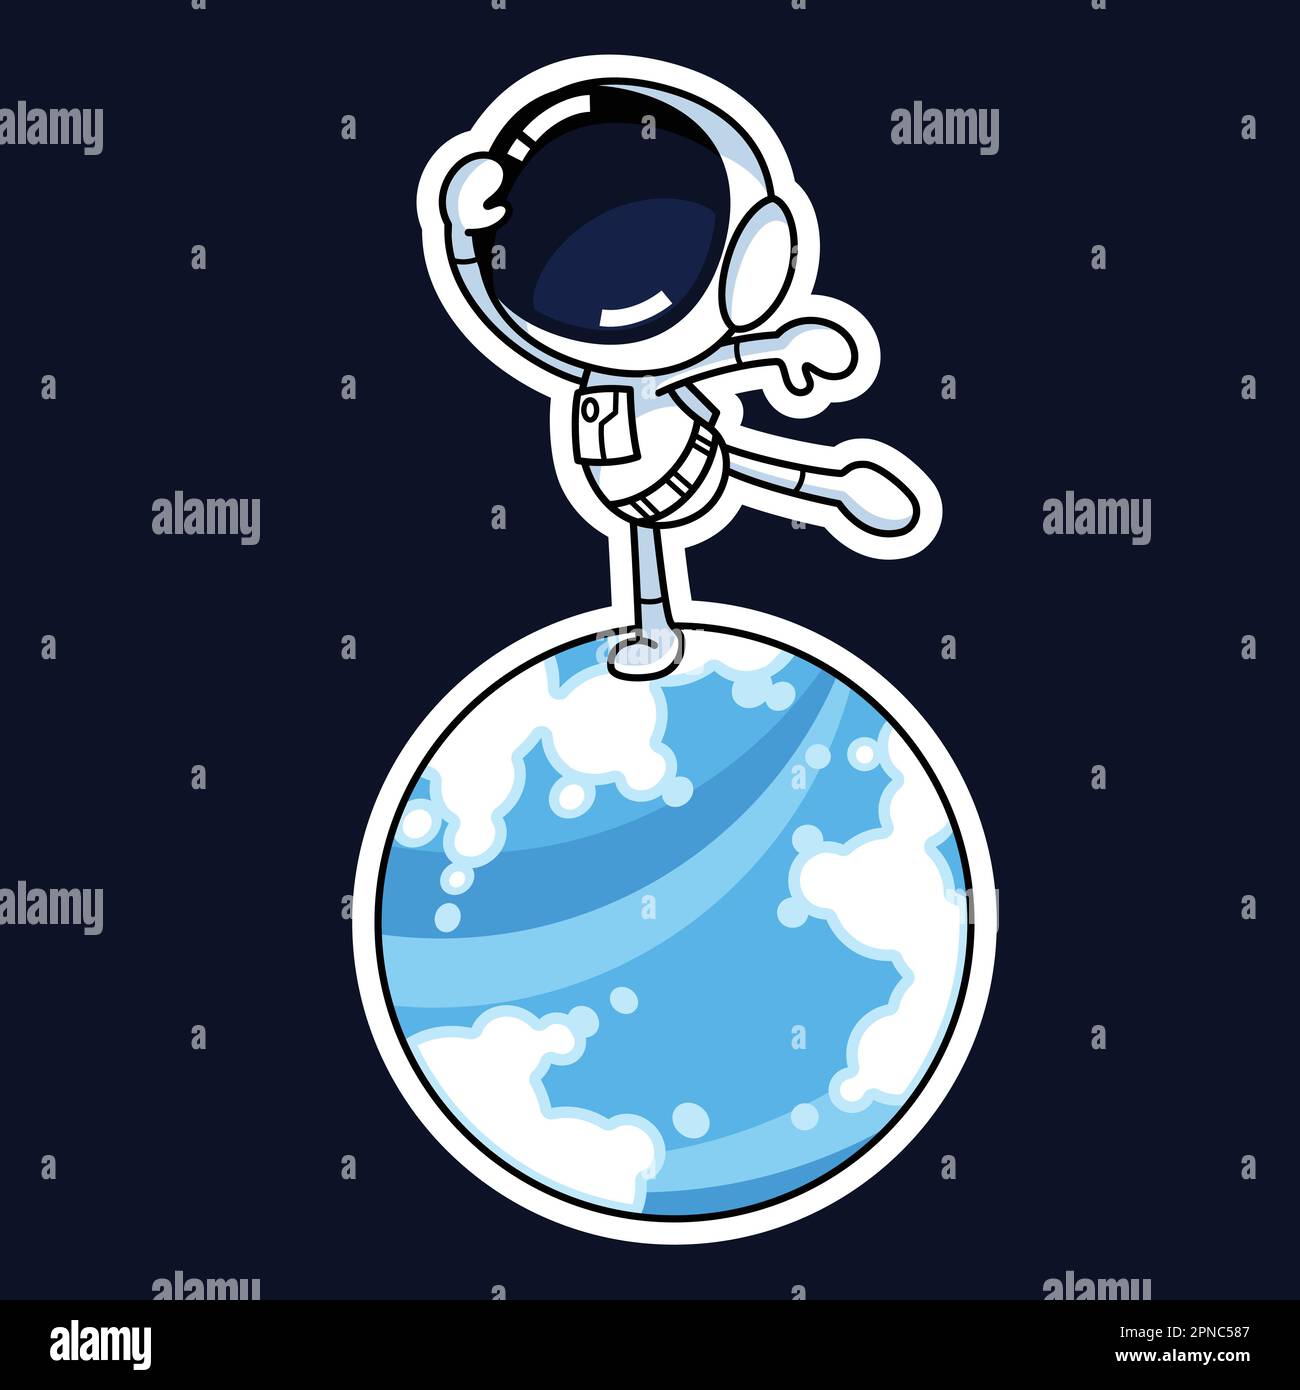 https://c8.alamy.com/comp/2PNC587/cute-astronaut-cartoon-character-standing-on-a-planet-premium-vector-graphic-asset-2PNC587.jpg